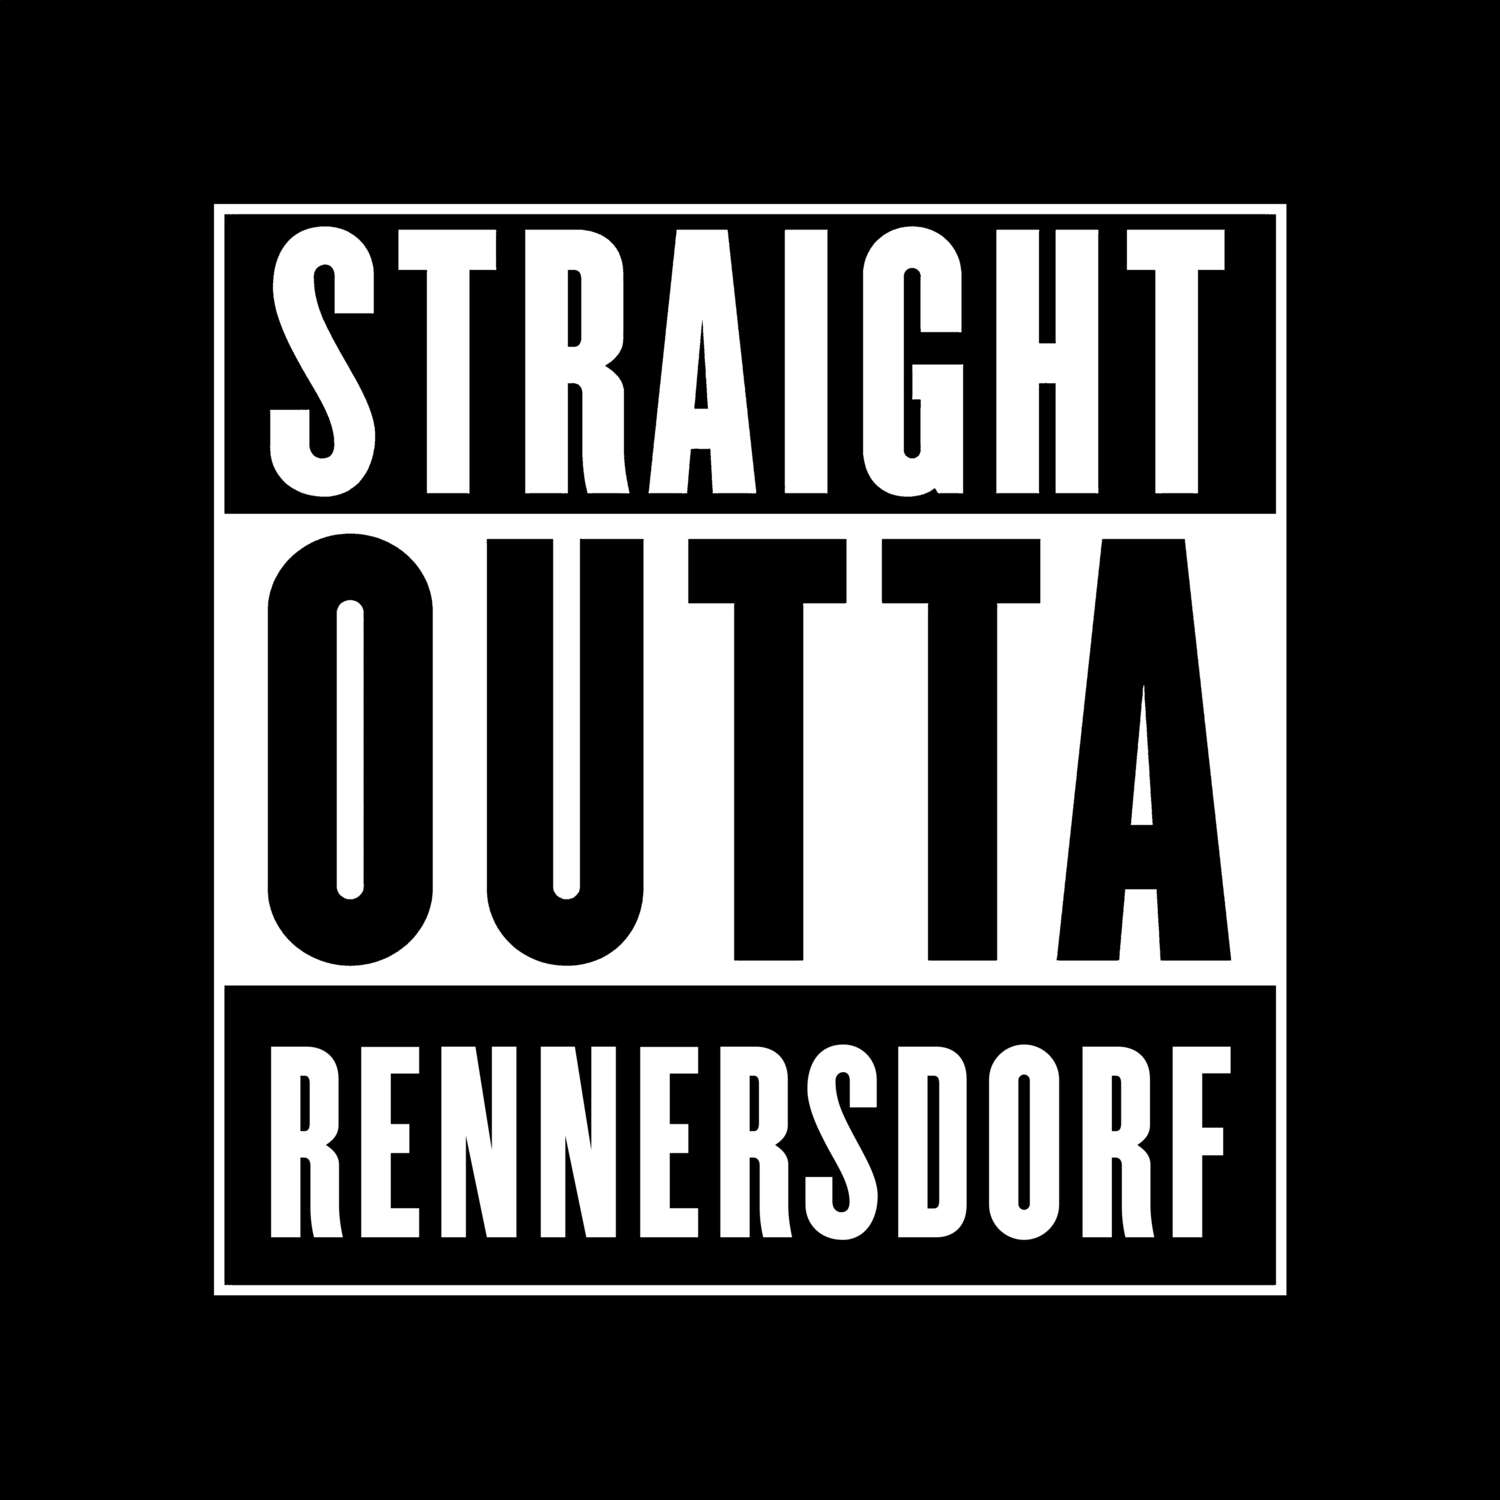 Rennersdorf T-Shirt »Straight Outta«